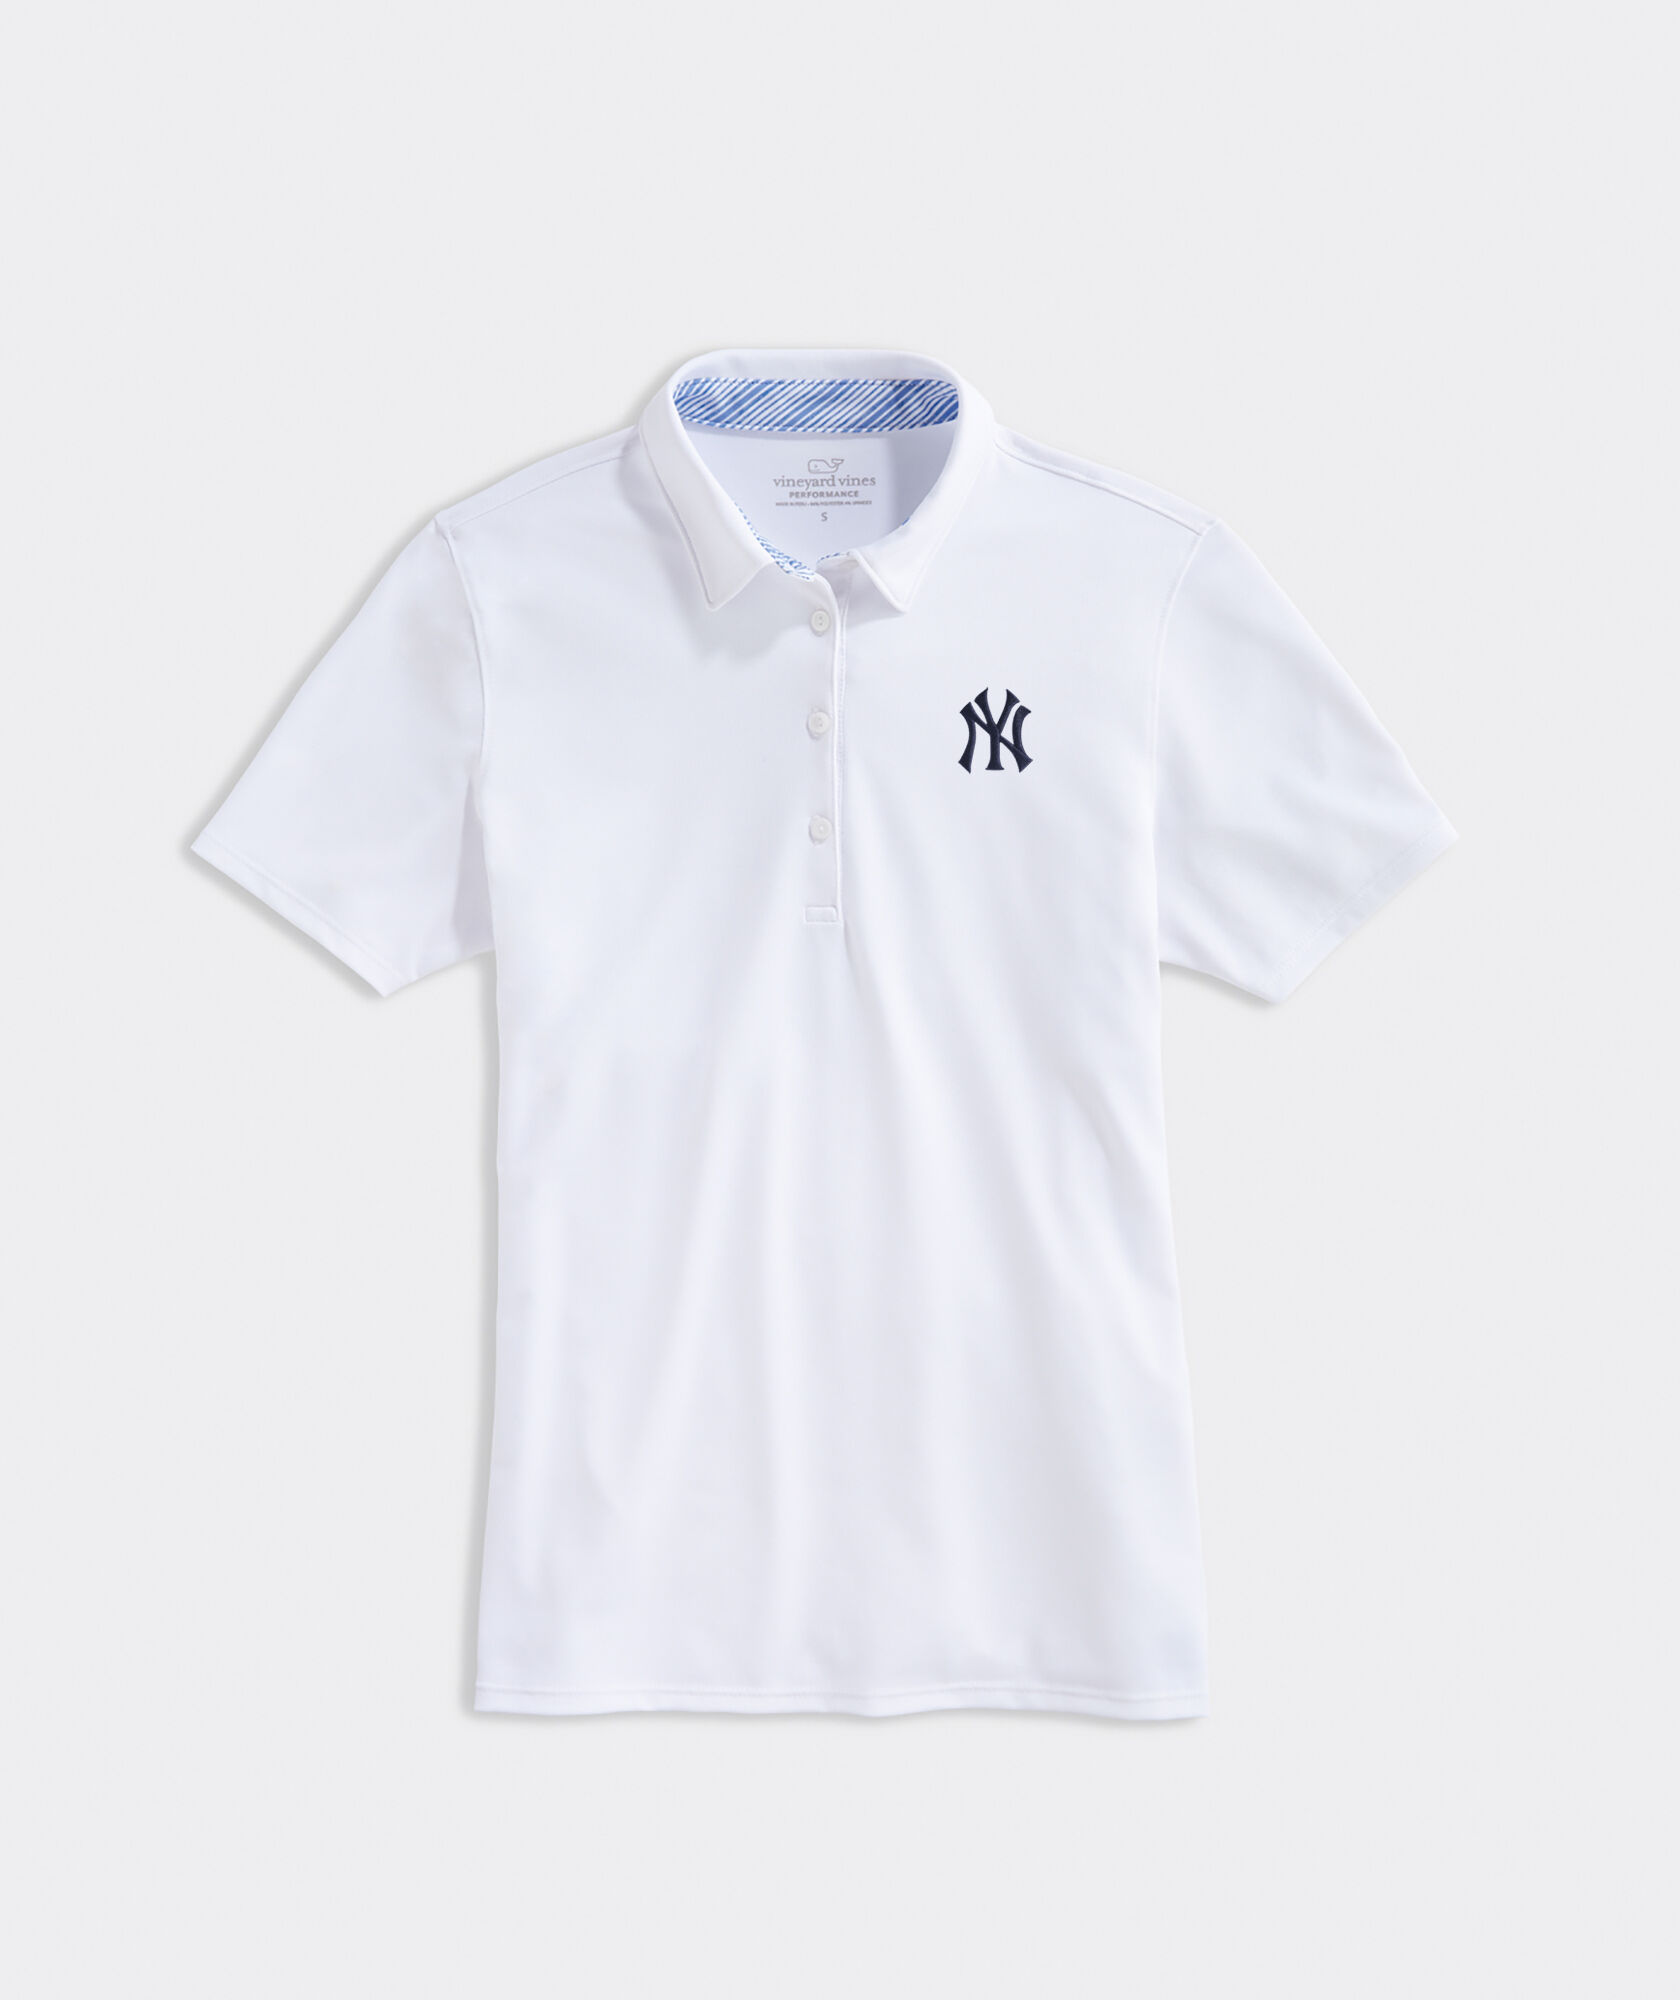 Shop Women's New York Yankees Dreamcloth® Shep Shirt™ at vineyard